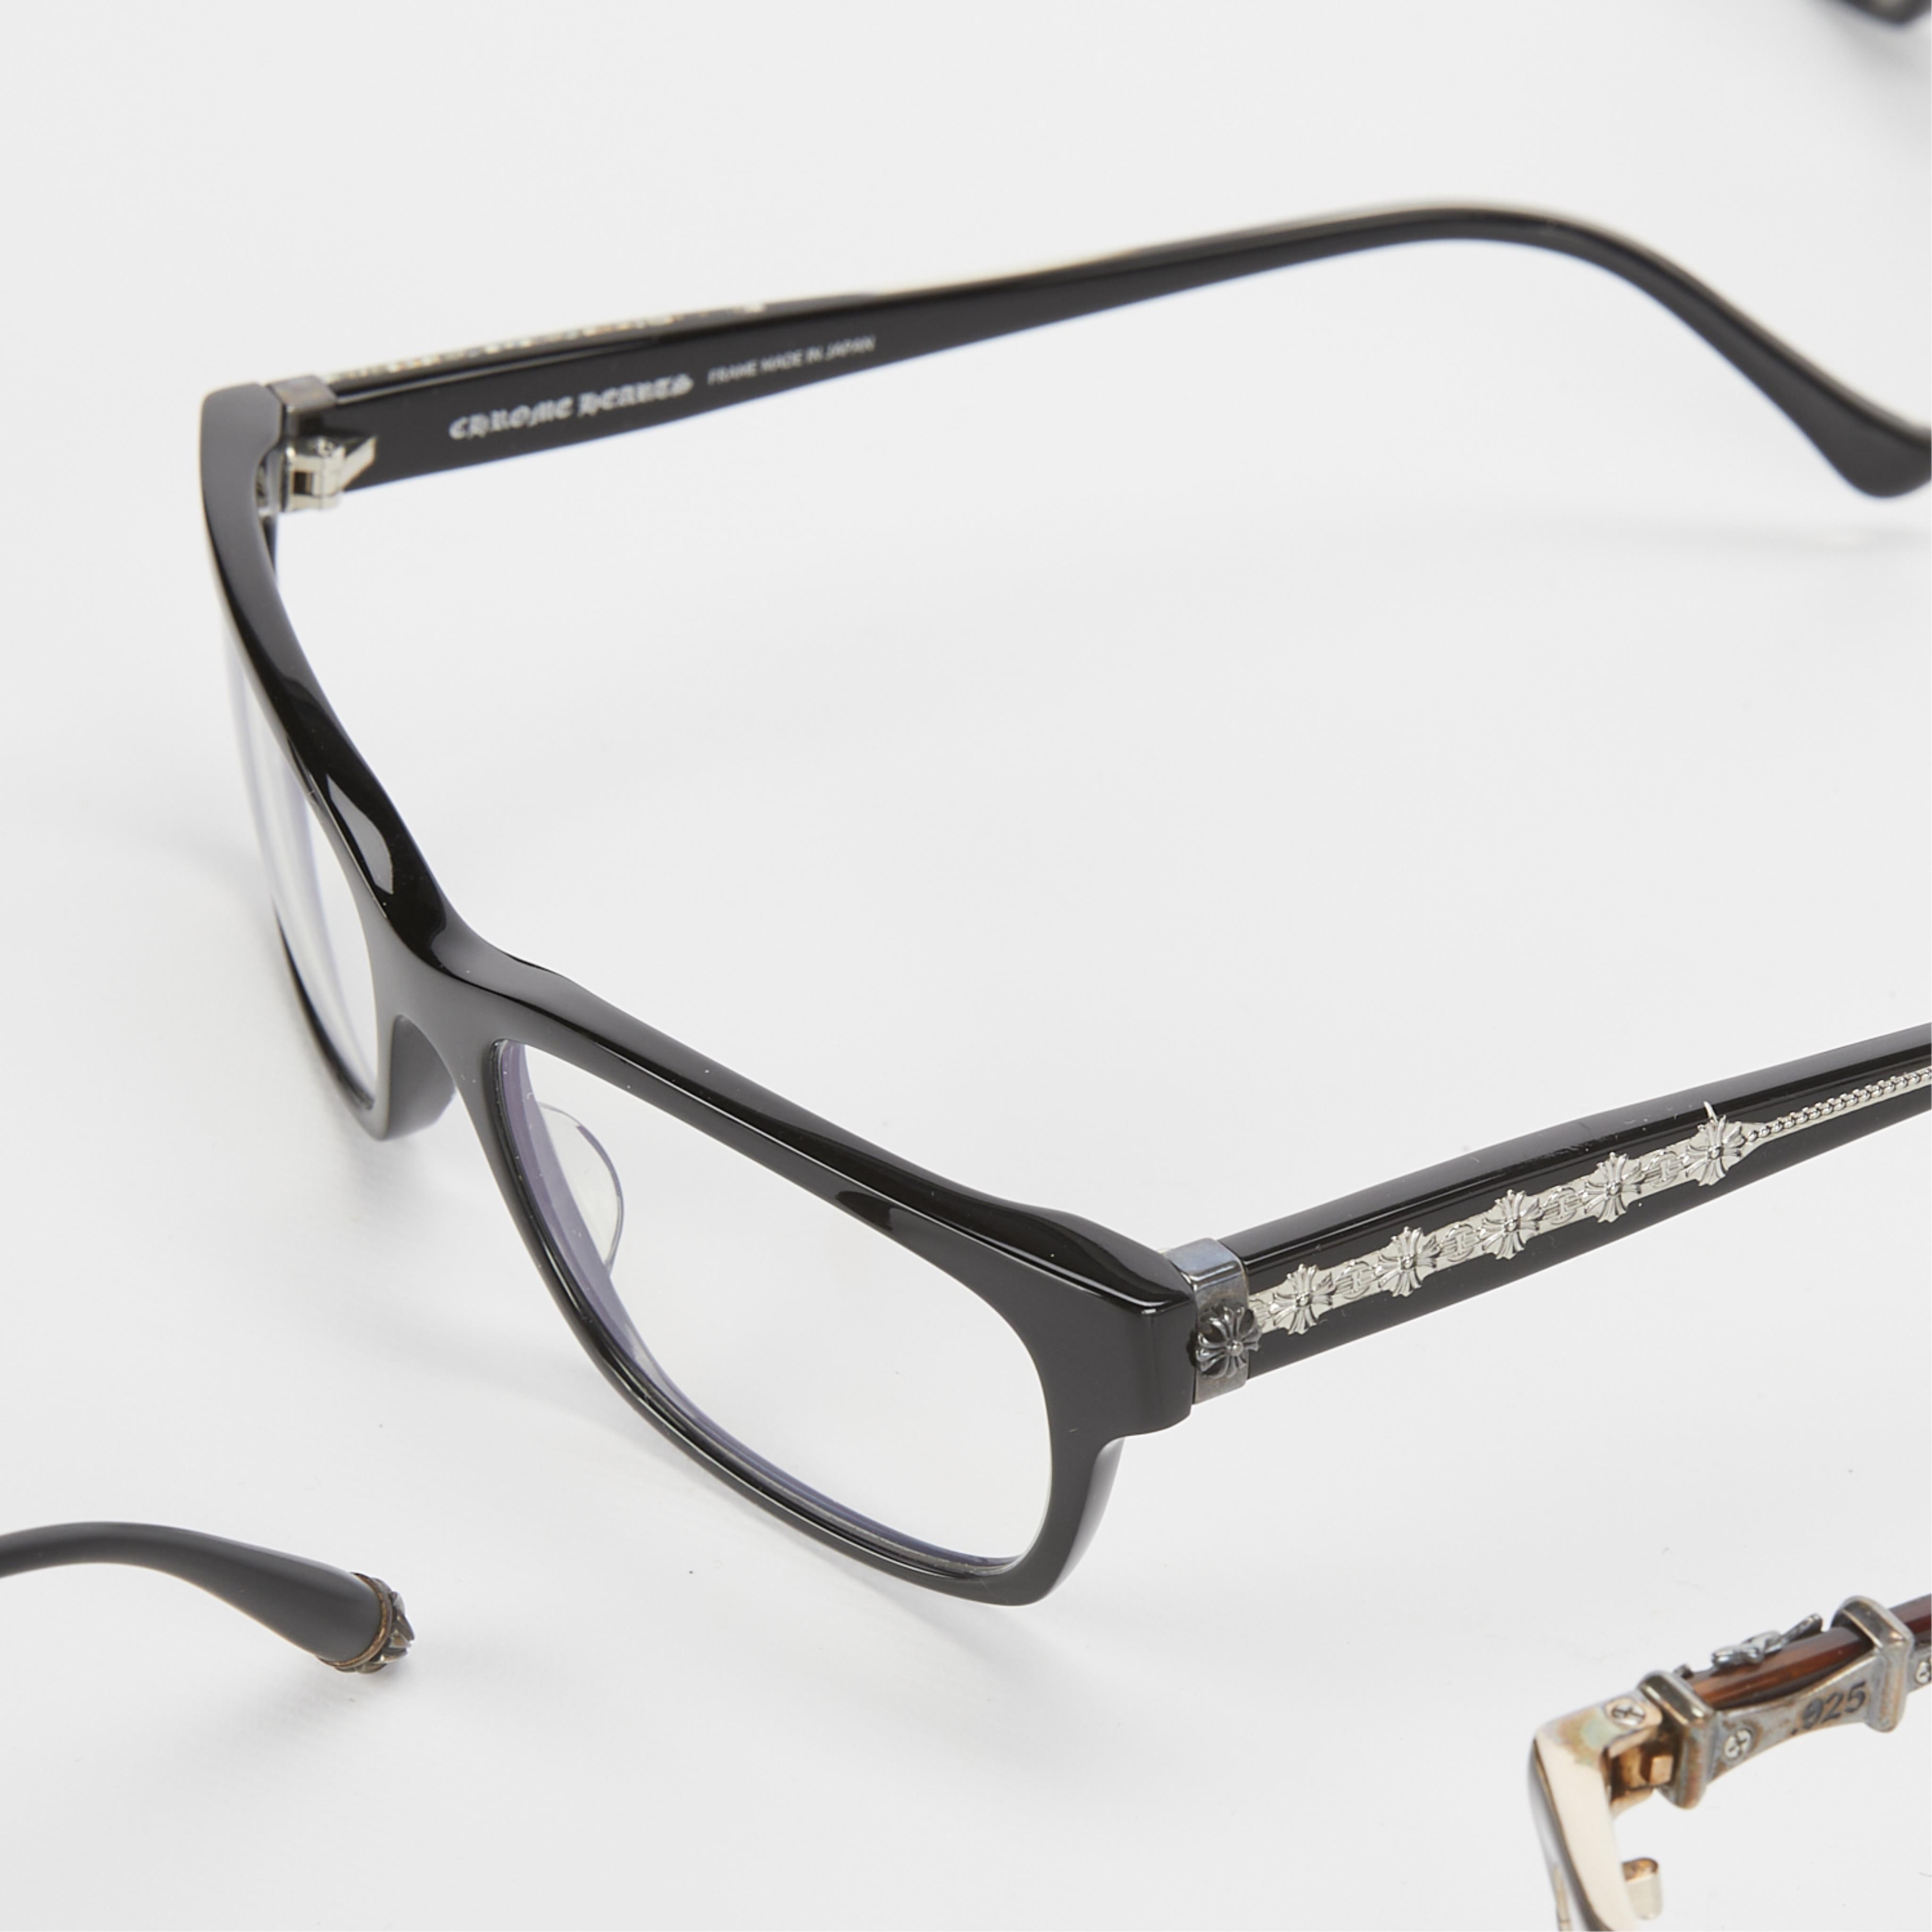 Grp of 7 Chrome Hearts Eyeglasses - Image 8 of 15